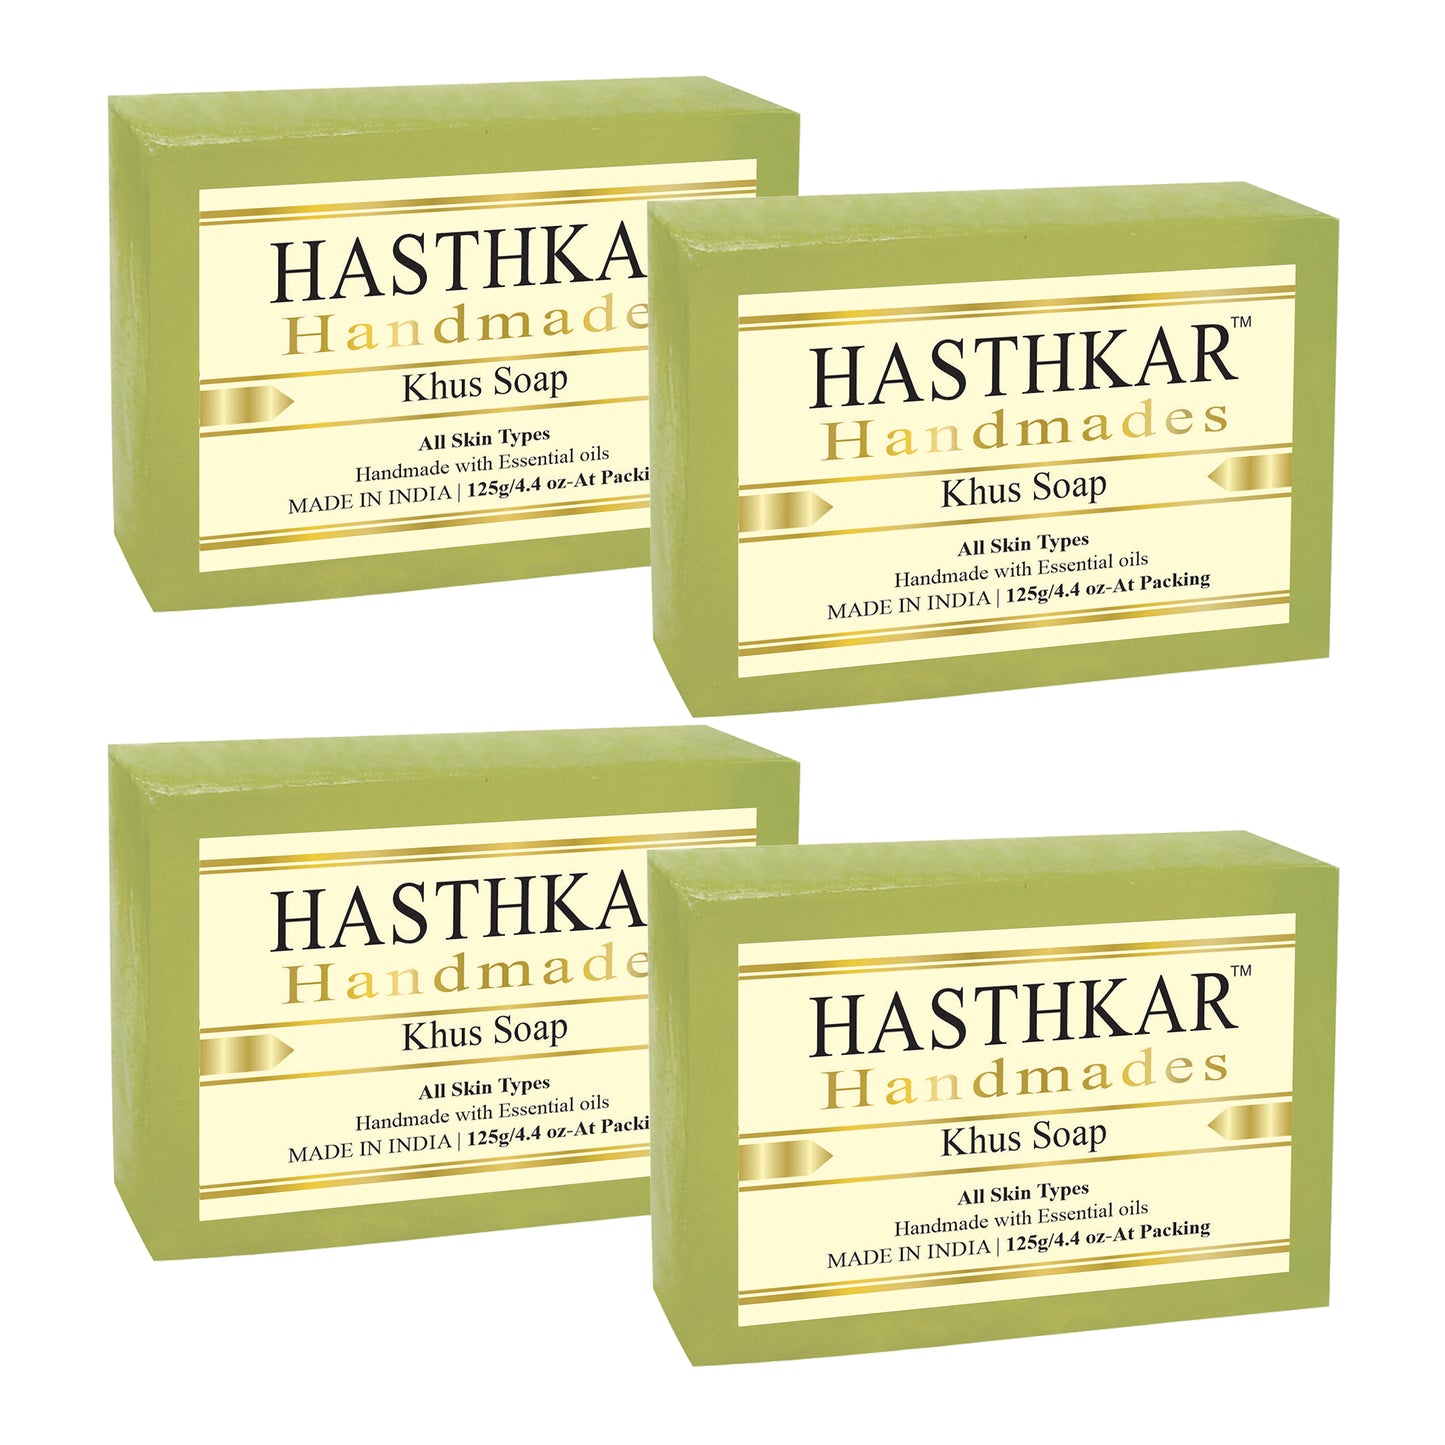 Hasthkar Handmades Glycerine Natural Khus Soap 125Gm